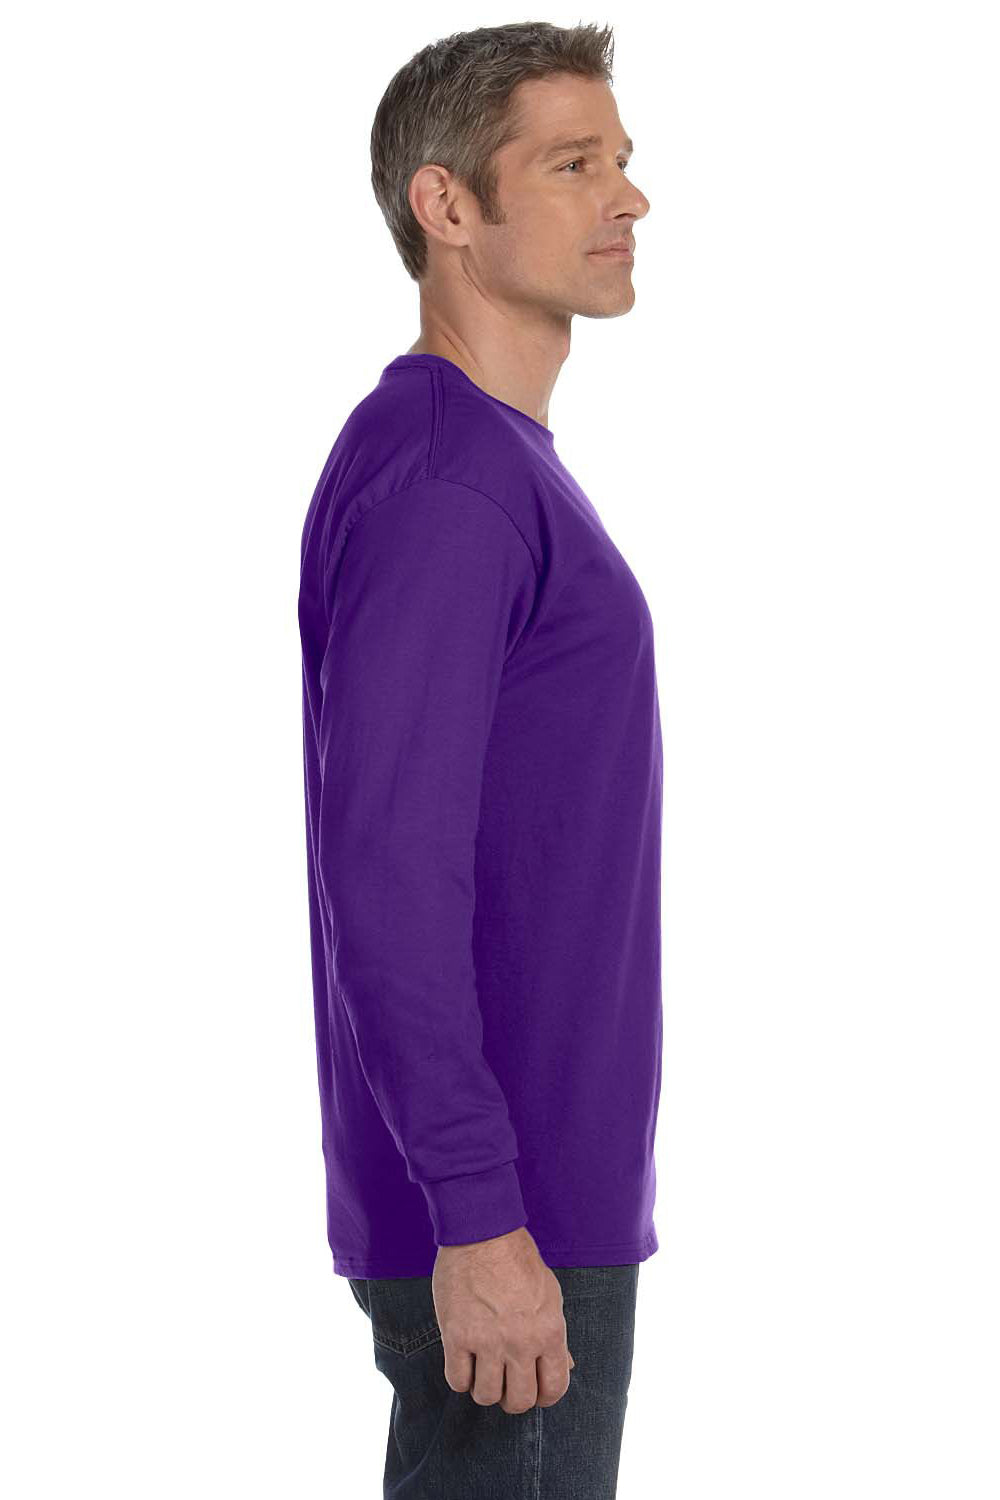 Gildan G540 Mens Long Sleeve Crewneck T-Shirt Purple Side